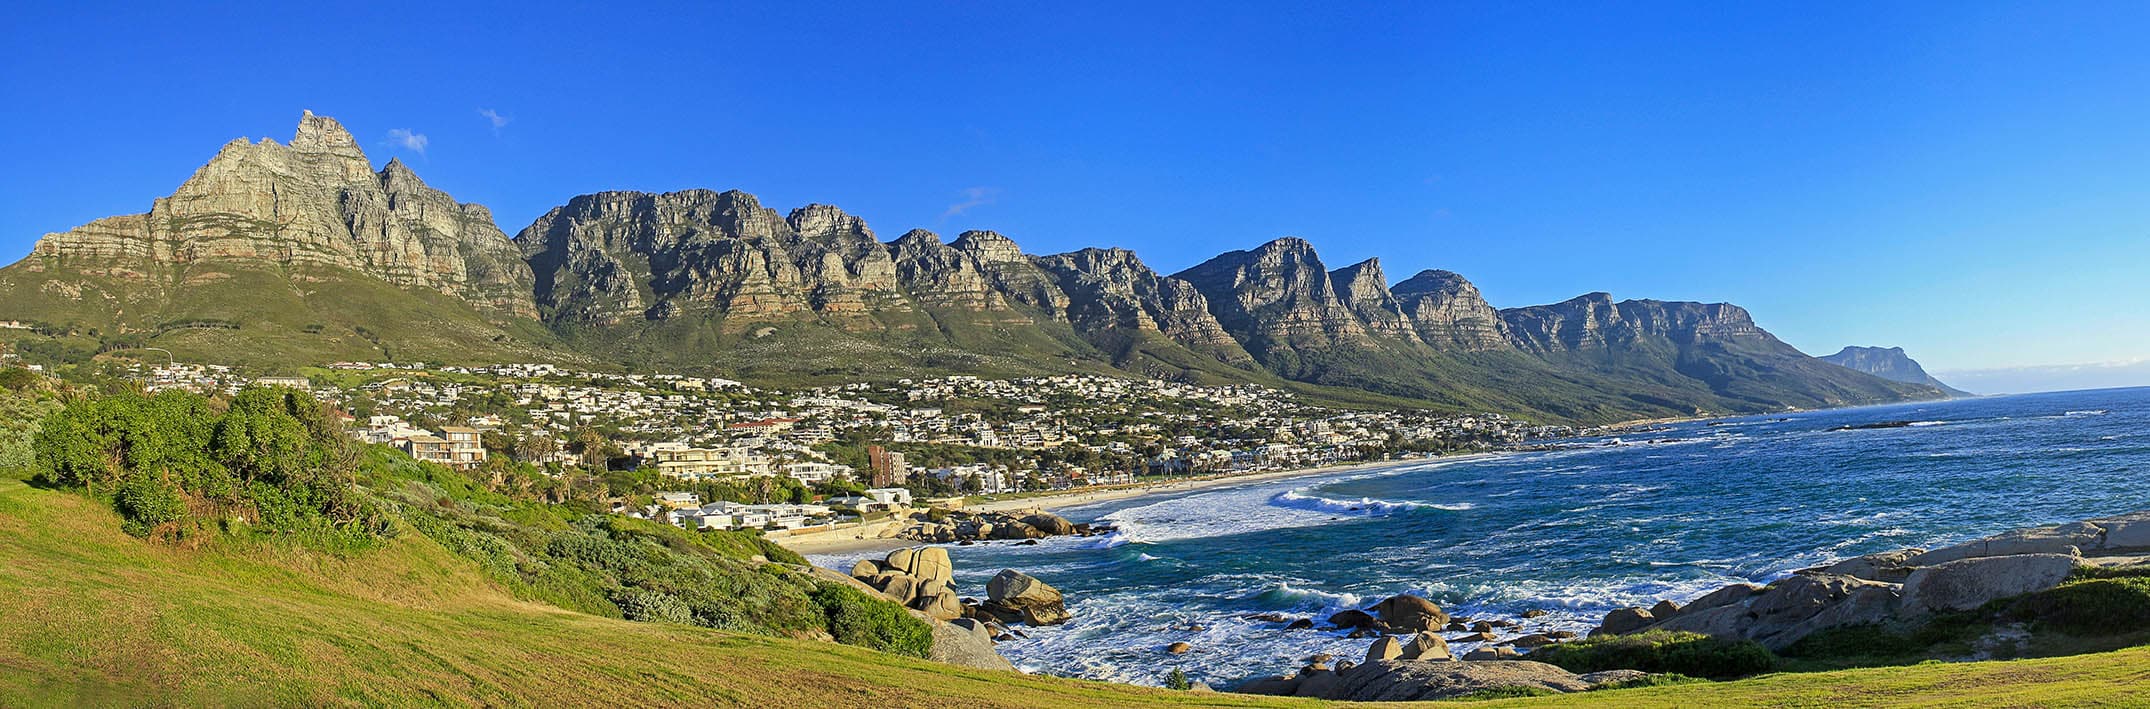 The Twelve Apostles facing the Atlantic Ocean in Cape Town